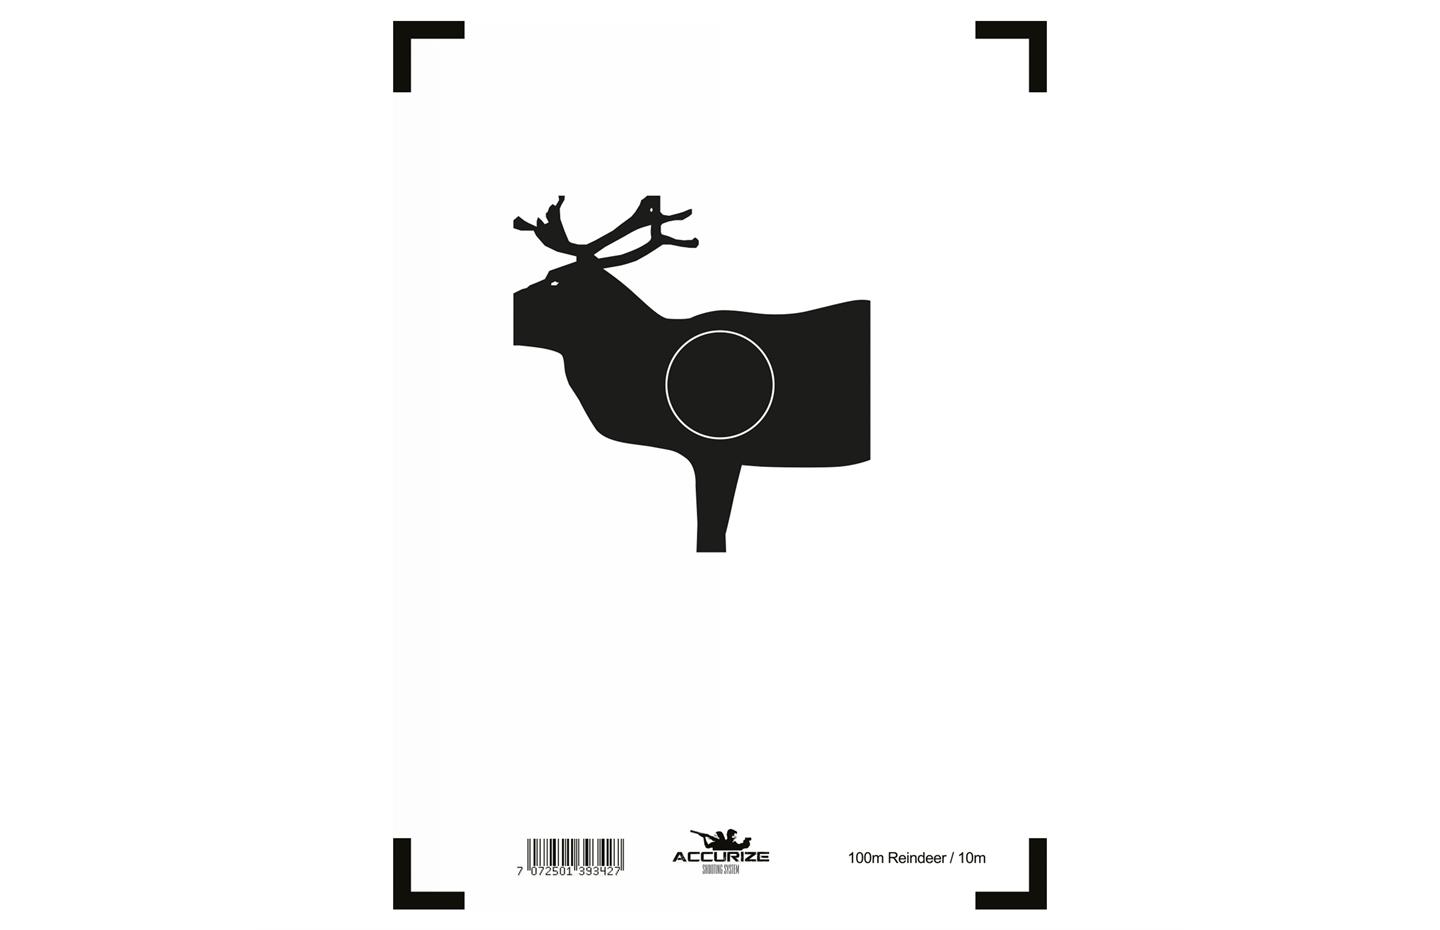 Accurize front target reindeer 100m/10m Image